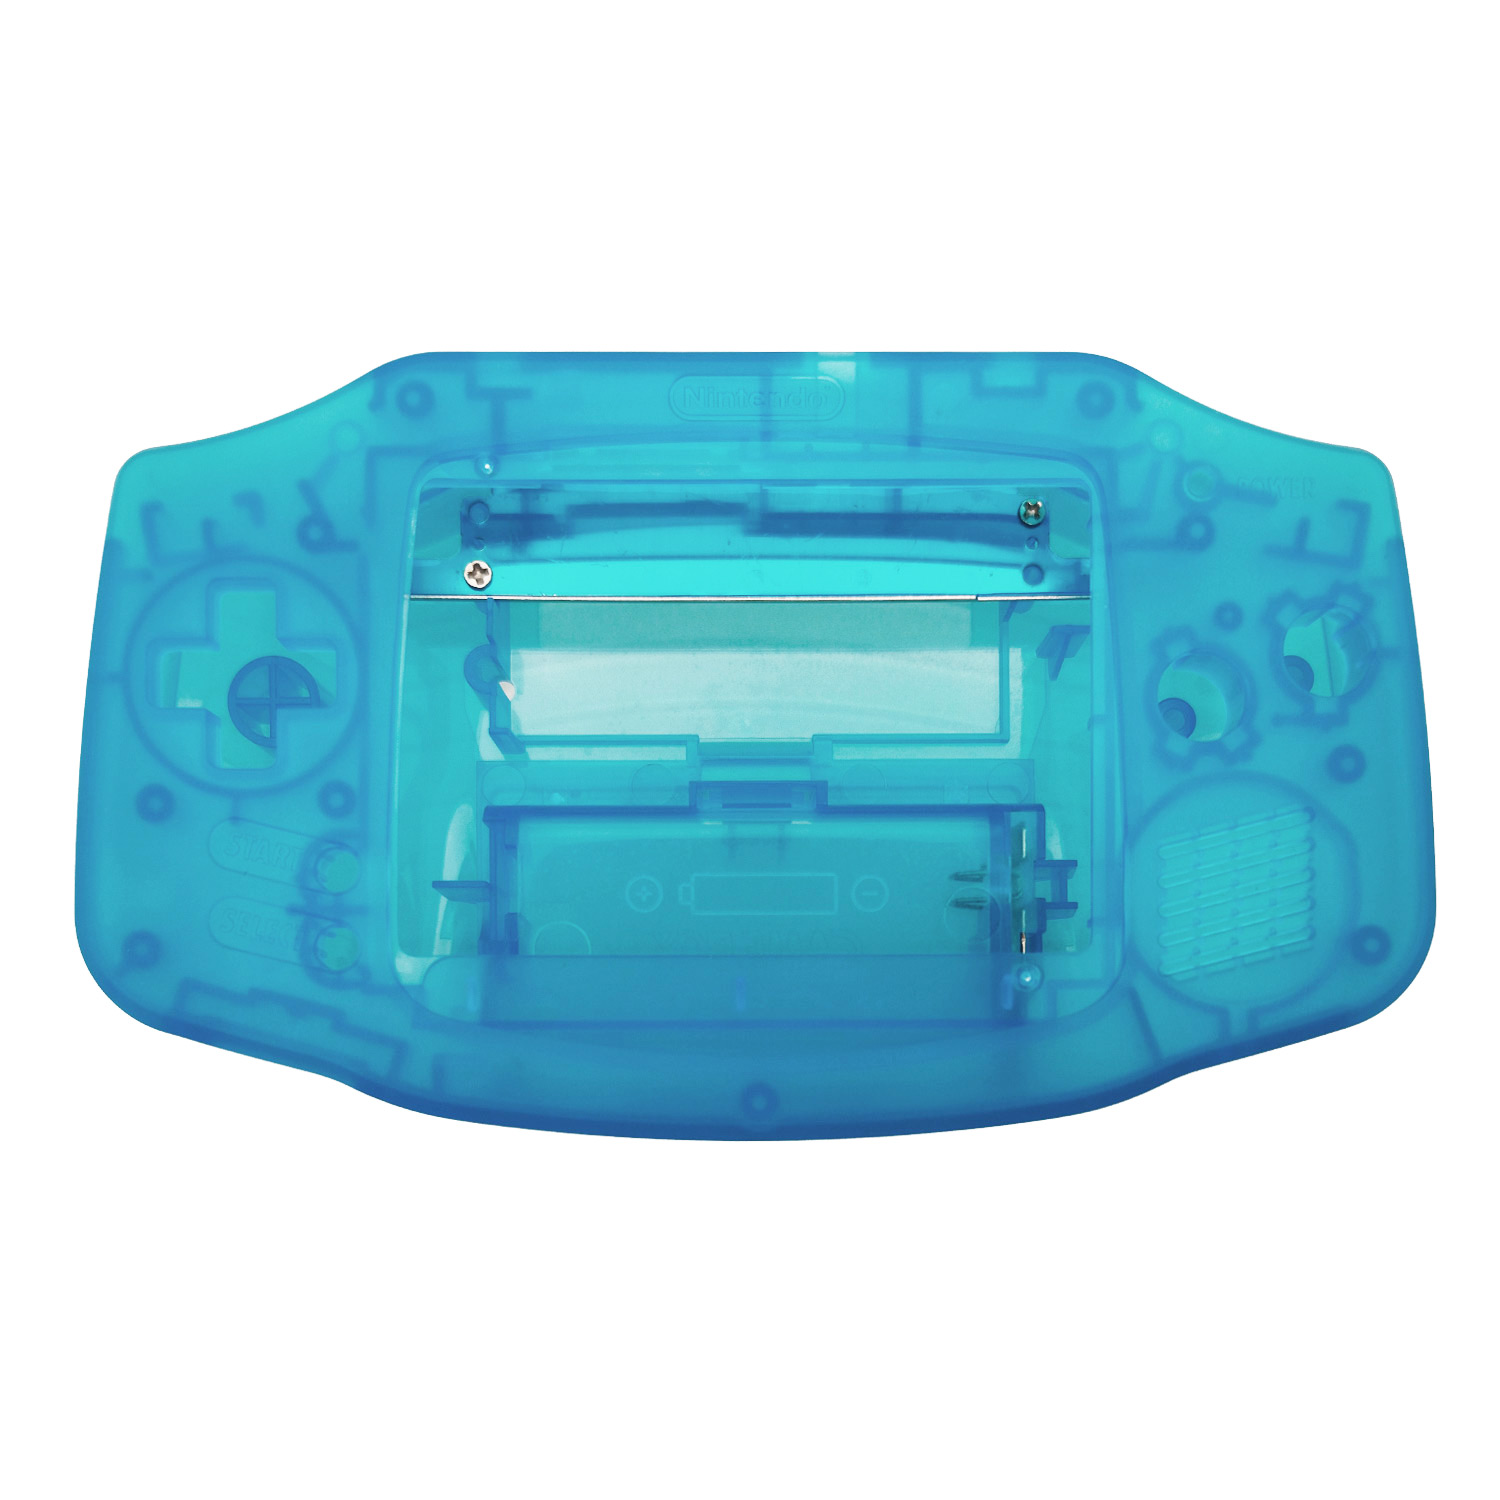 Game Boy Advance Shell (Blue Clear) - SALE